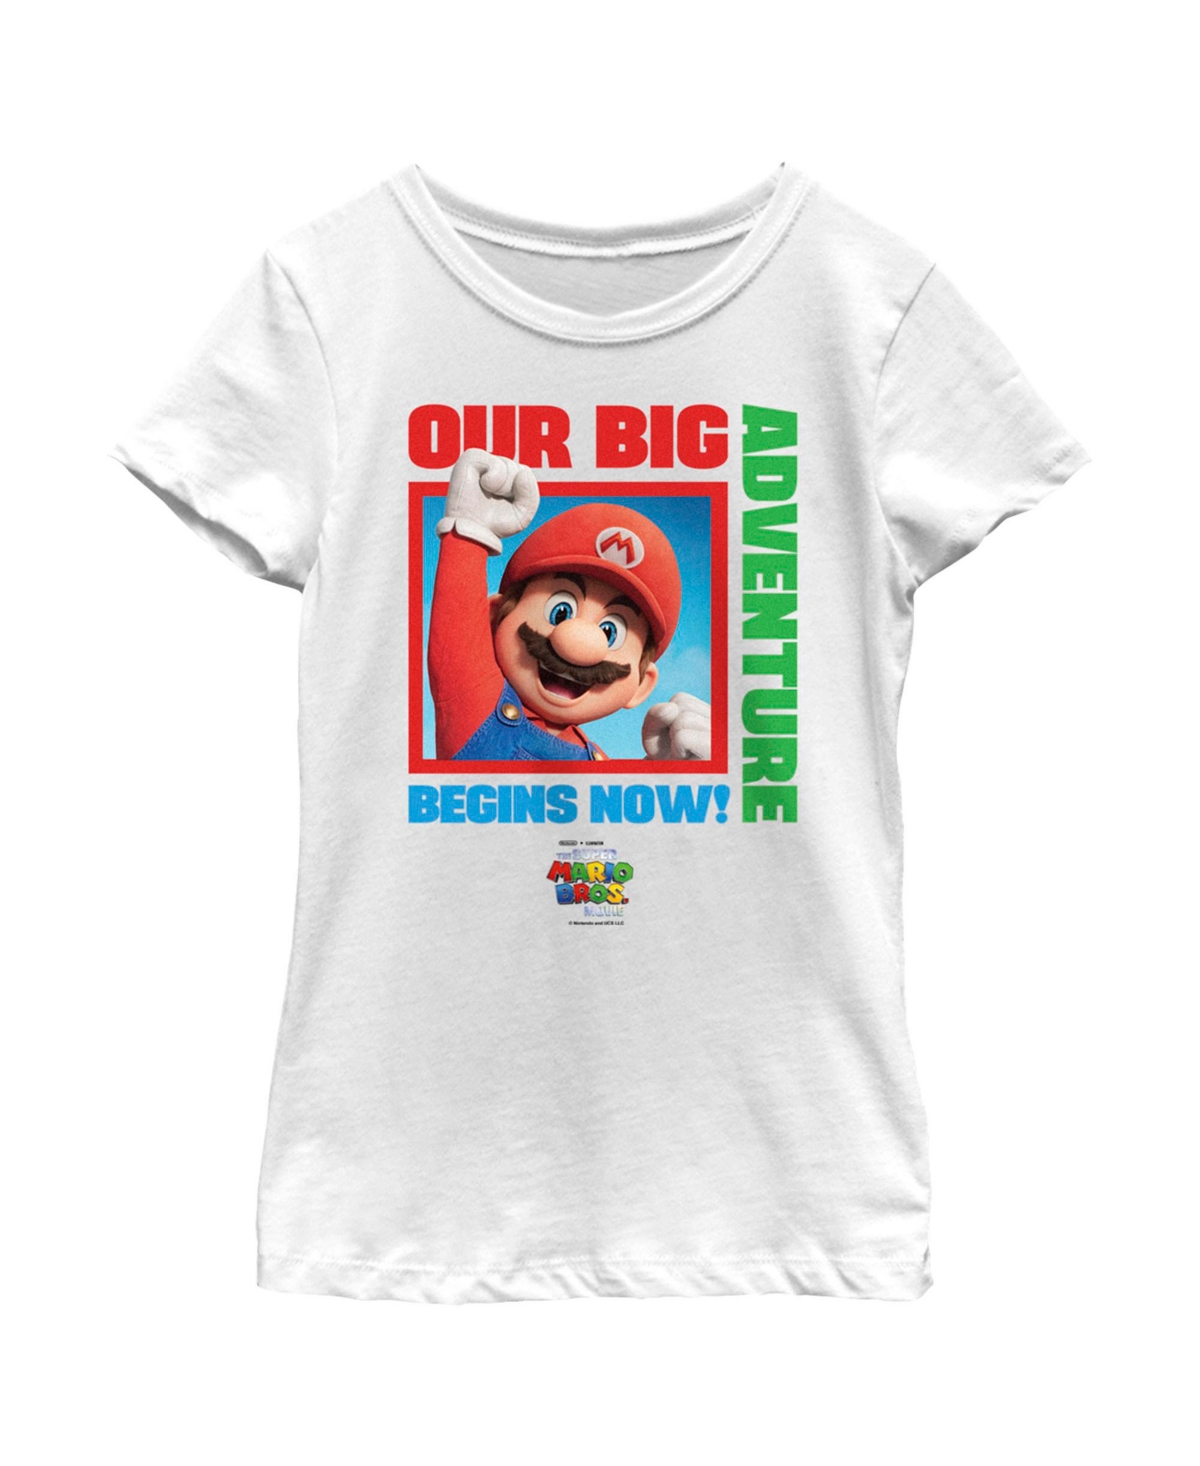 Nintendo Girl's The Super Mario Bros. Movie Mario Our Big Adventure Begins Now Child T-shirt In White